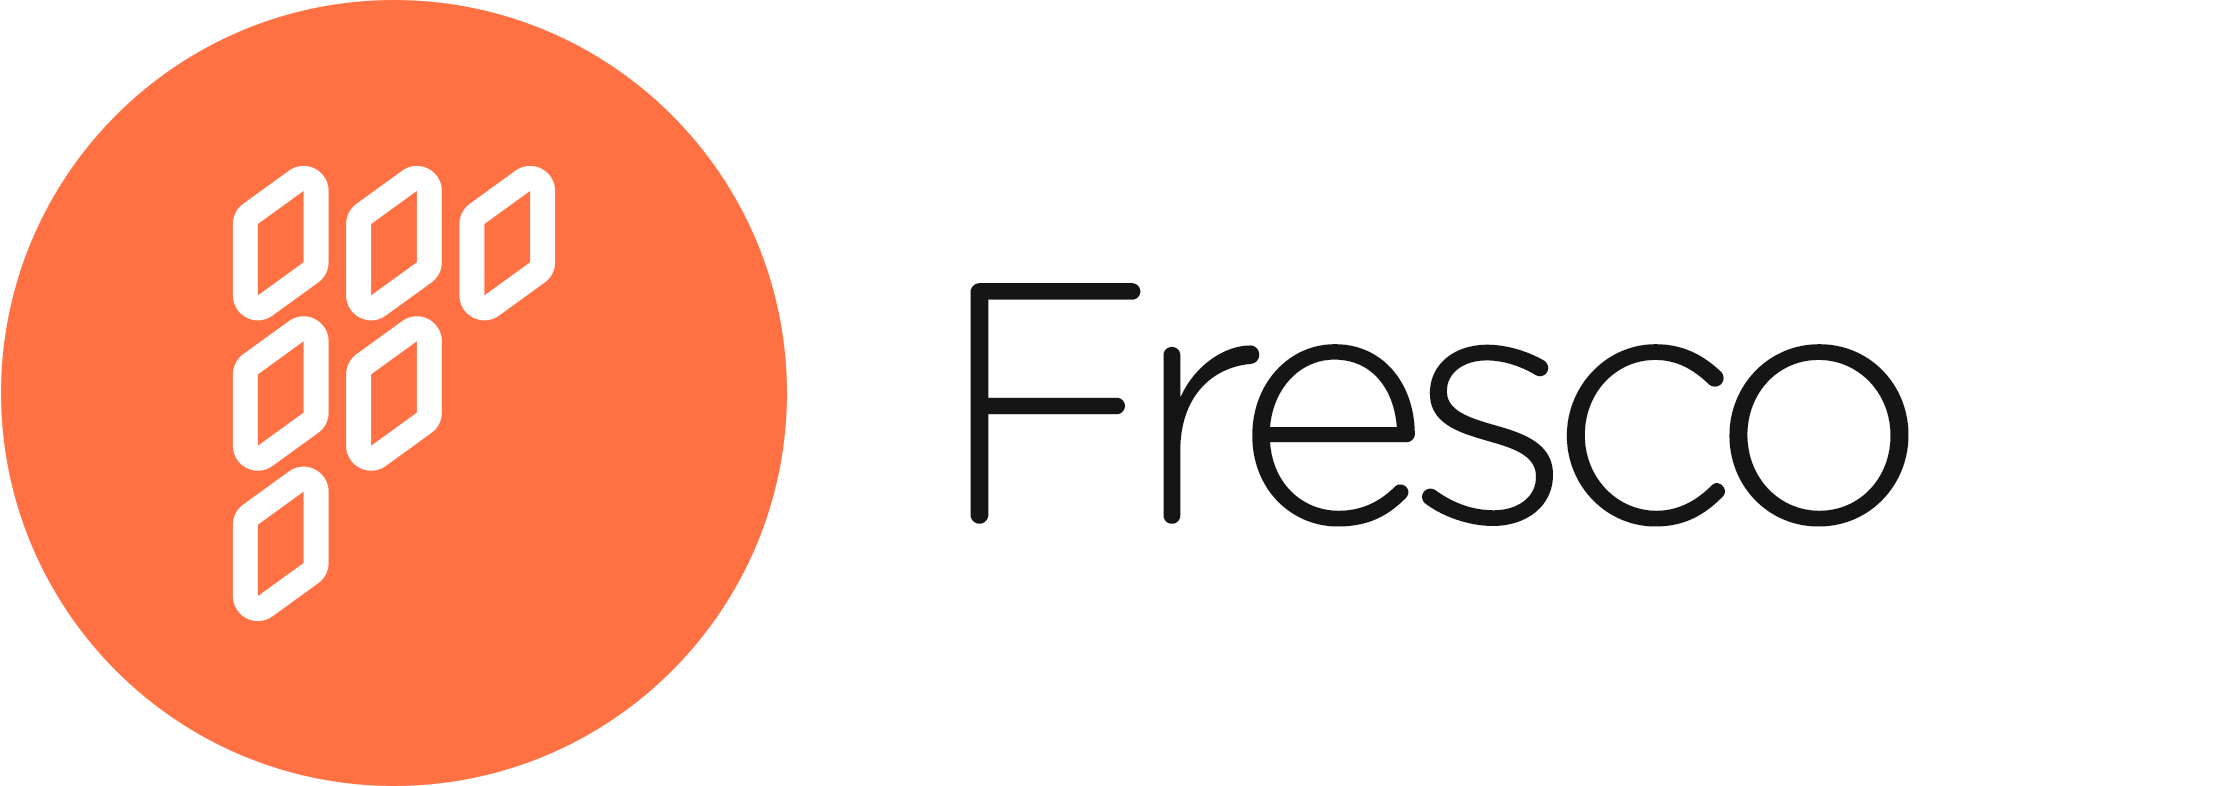 Fresco Logo - Getting Started with Fresco